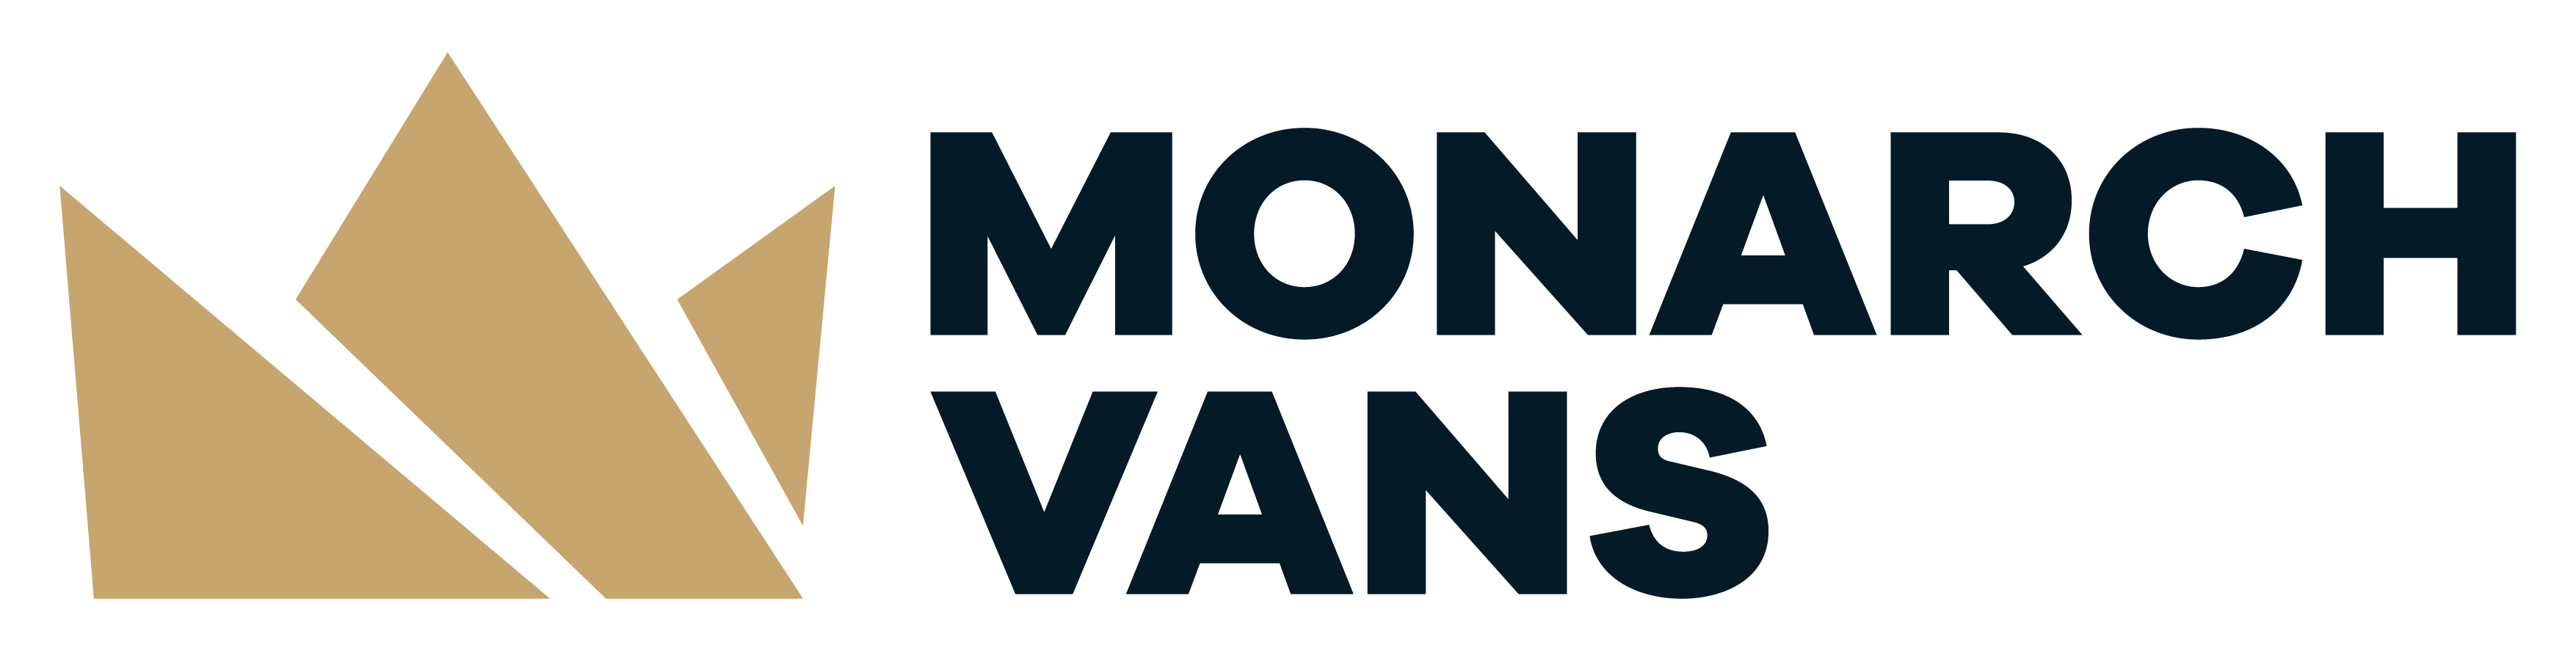 Monarch Vans Ltd logo